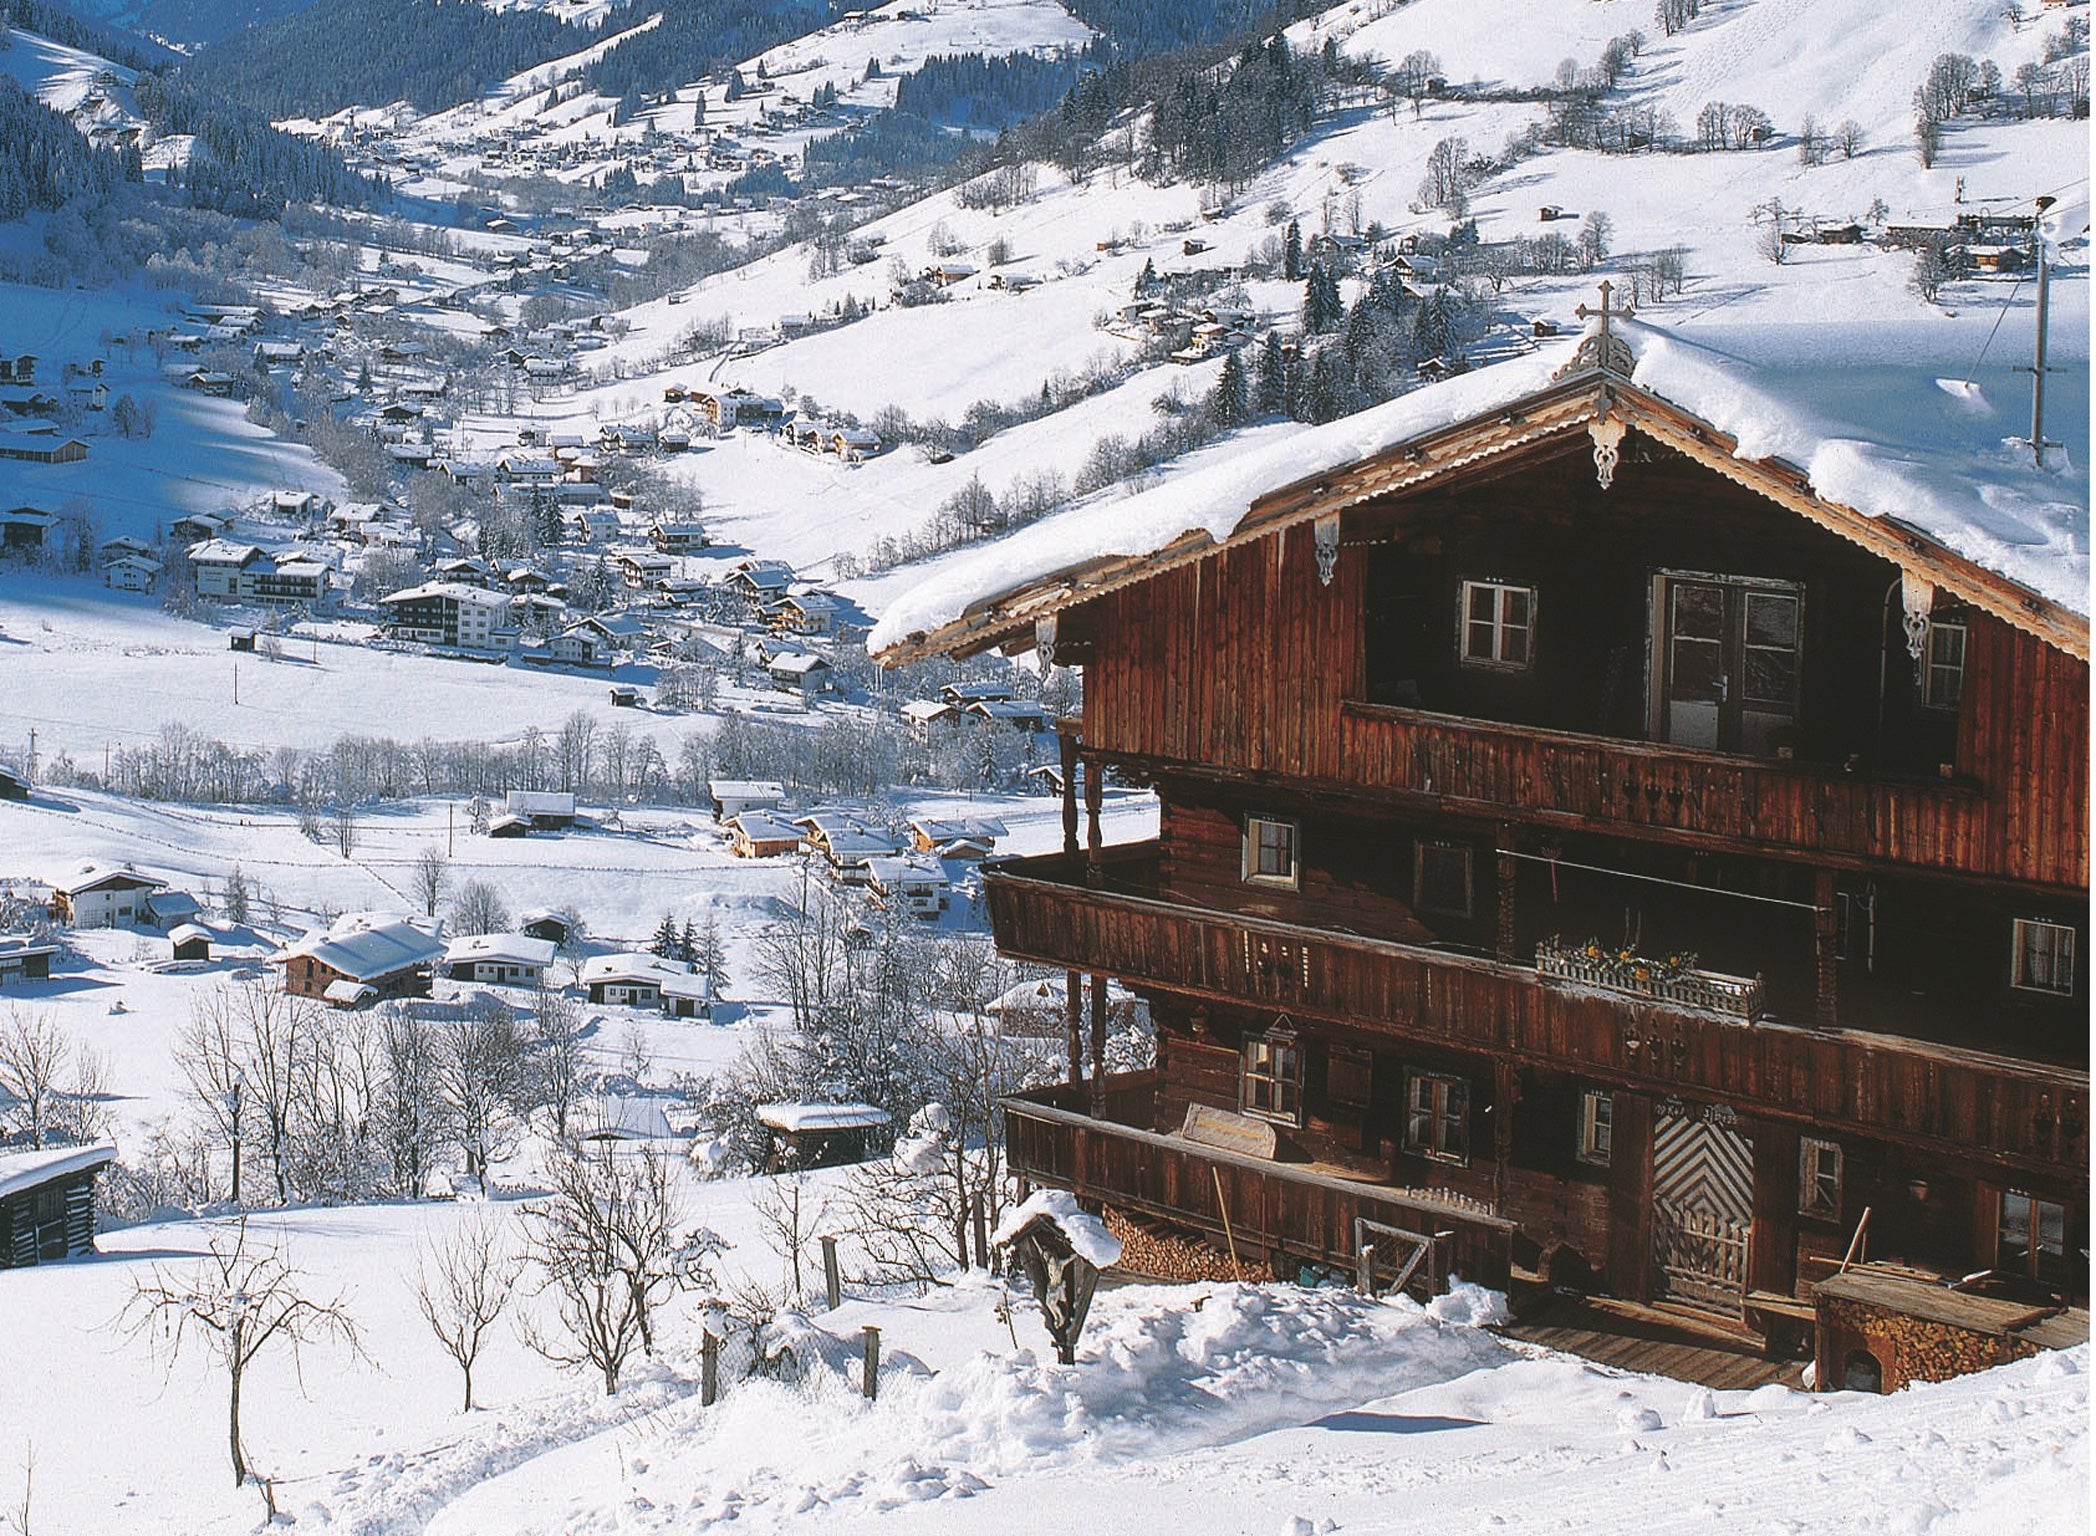 Top Tirol: Austria is opening its new Tirolean “Ski Jewel”, which will include Wildschönau